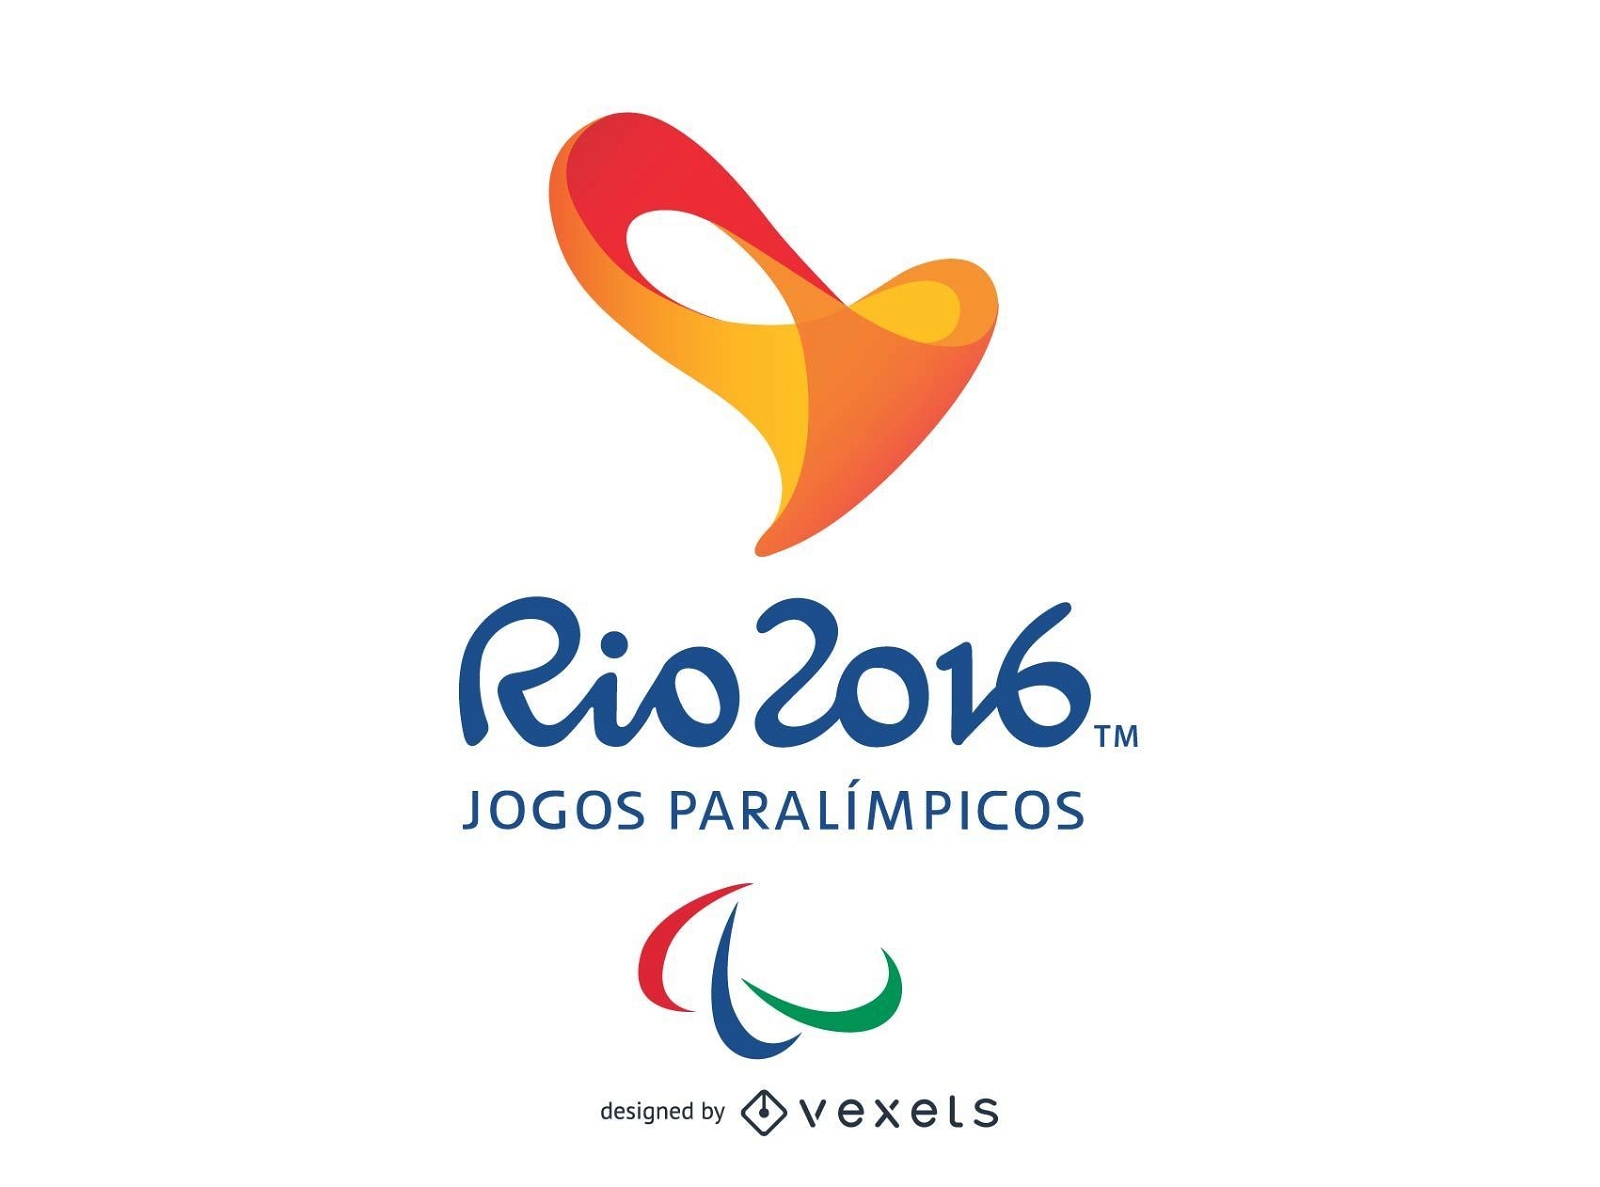 Jogos Paraol?mpicos Rio 2016